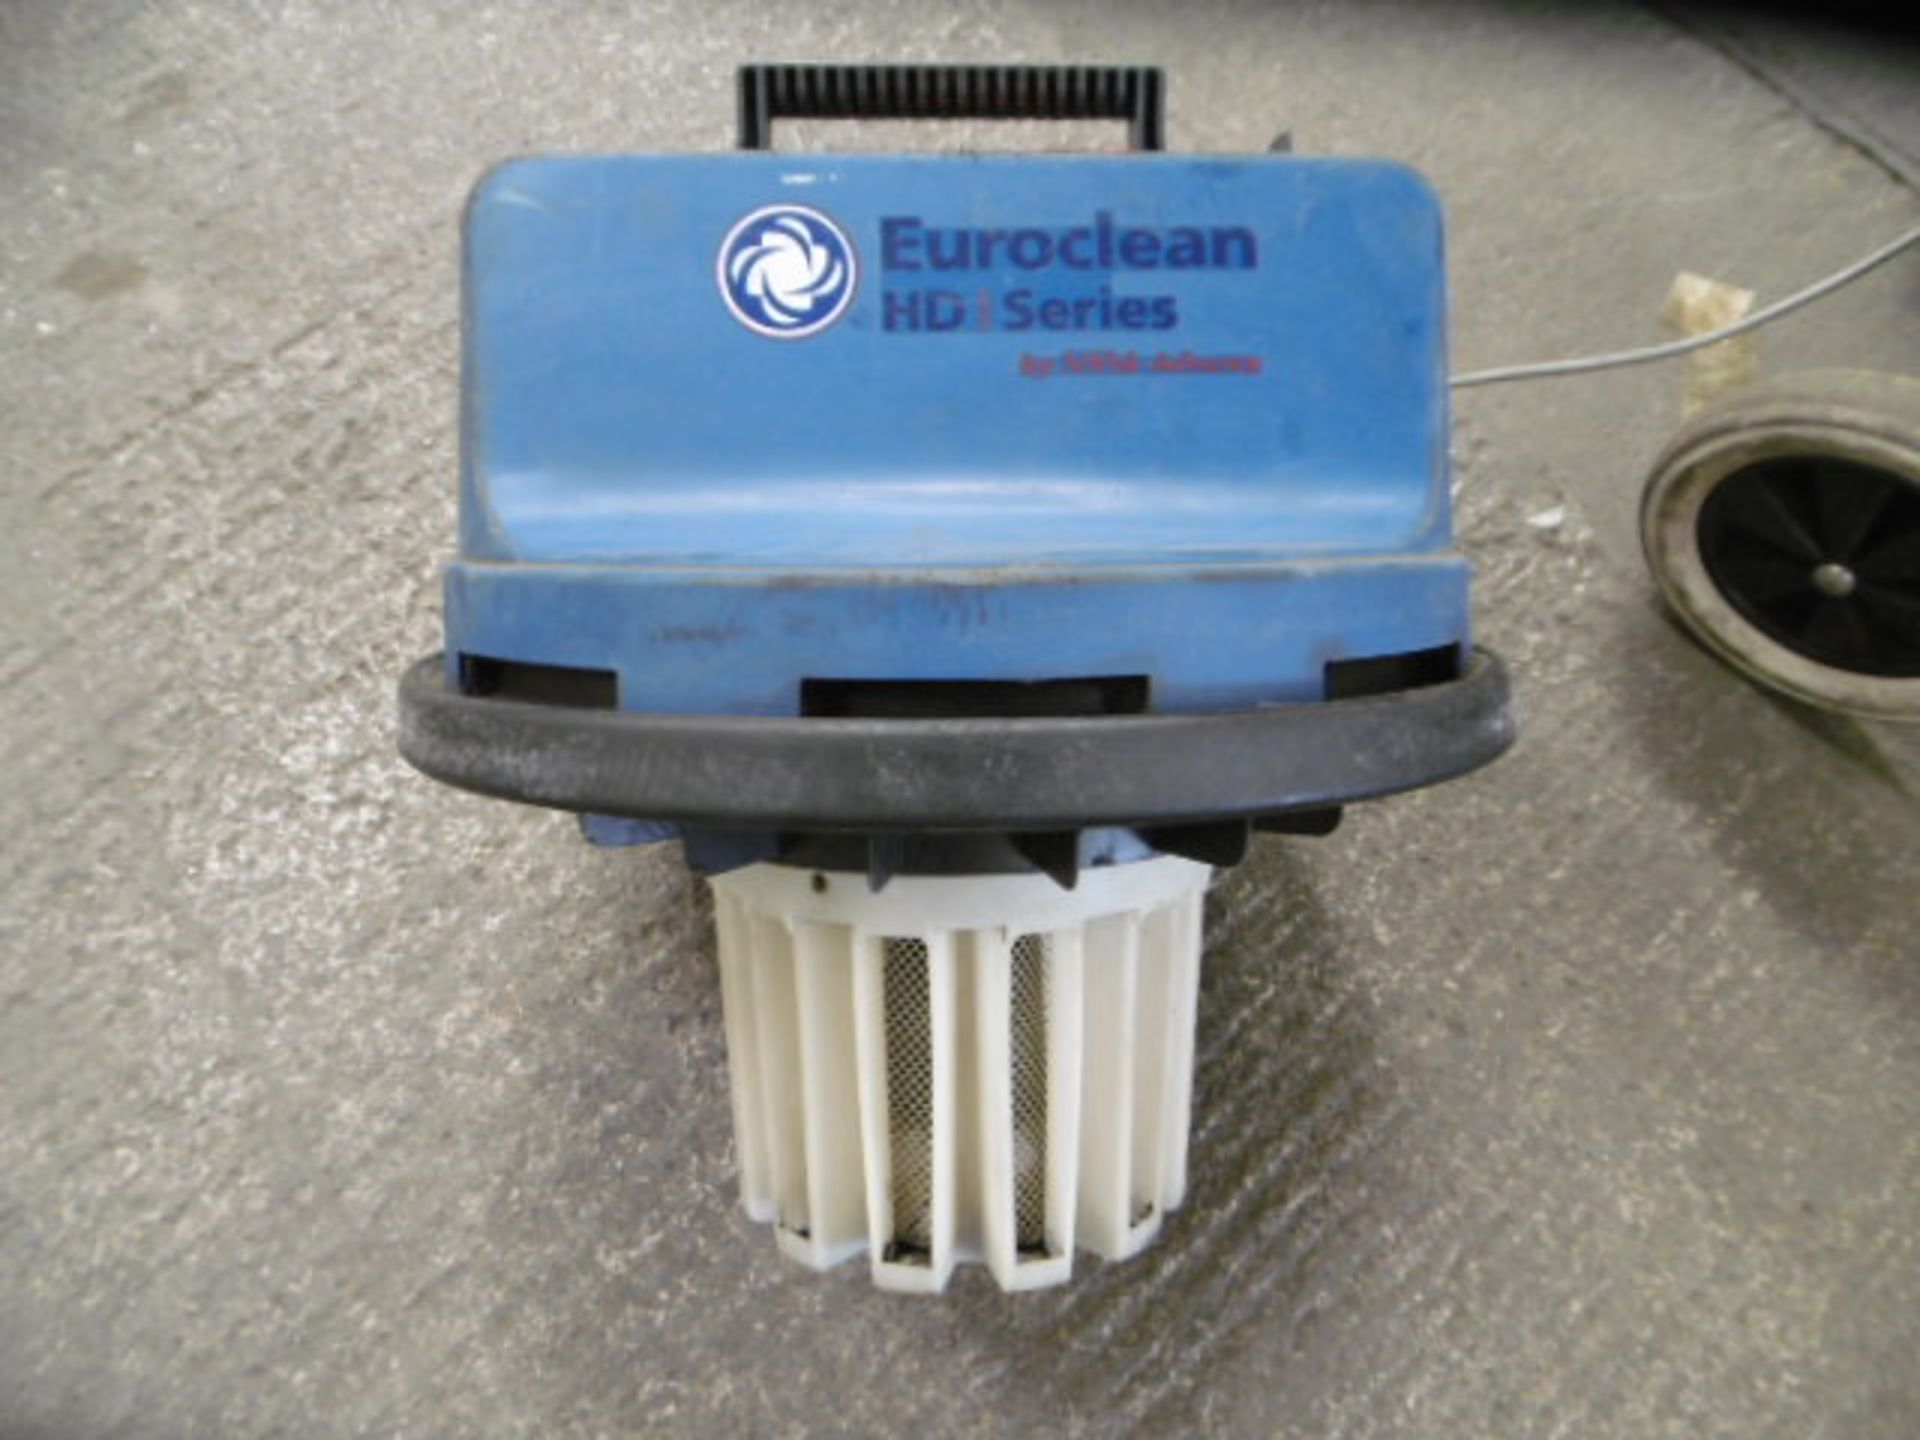 Nilfisk-Advance UZ 868 E HD Vacuum Cleaner - Image 5 of 6